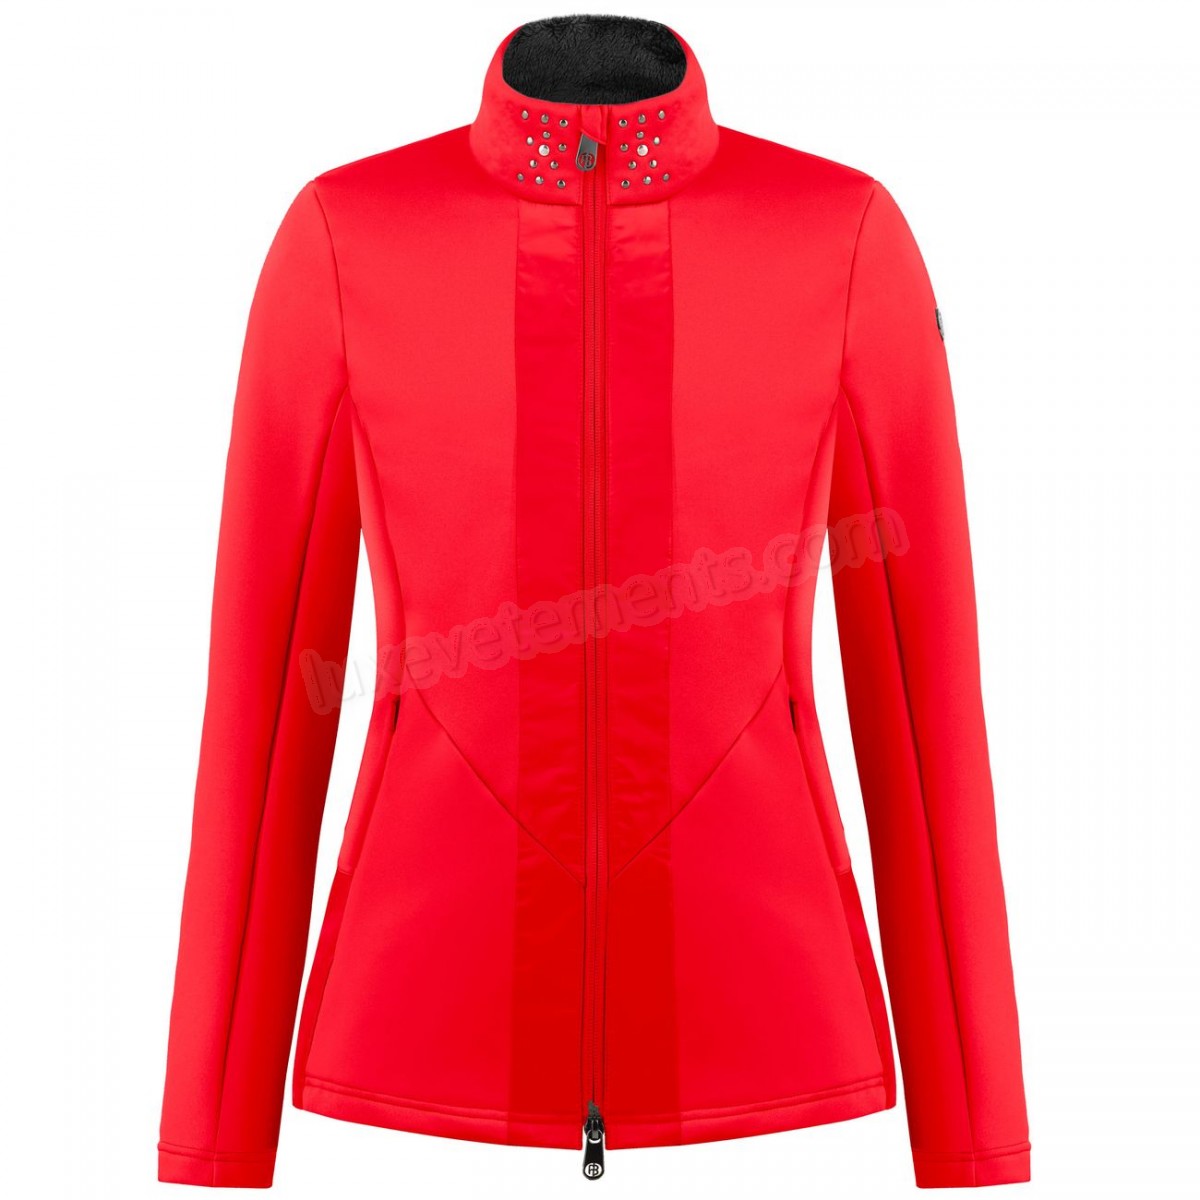 Poivre Blanc-Sports d'hiver femme POIVRE BLANC Veste En Polaire Poivre Blanc Hybrid Stretch Fleece Jacket 1702 Scarlet Red 5 Femme Vente en ligne - -4